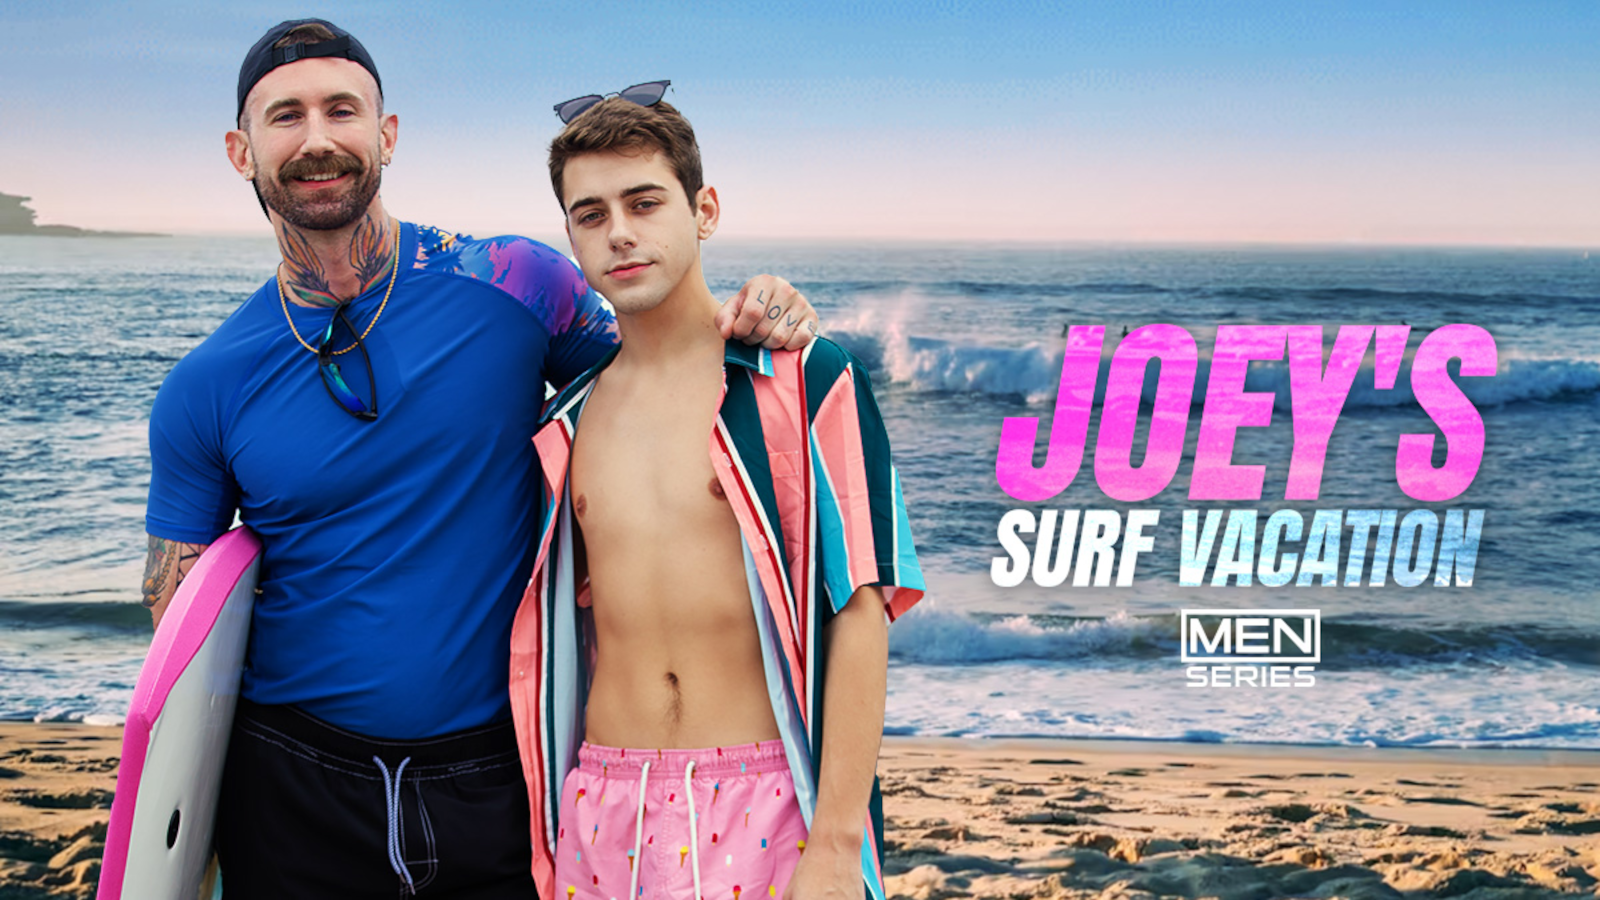 Men.com Announces New Series 'Joey's Surf Vacation'